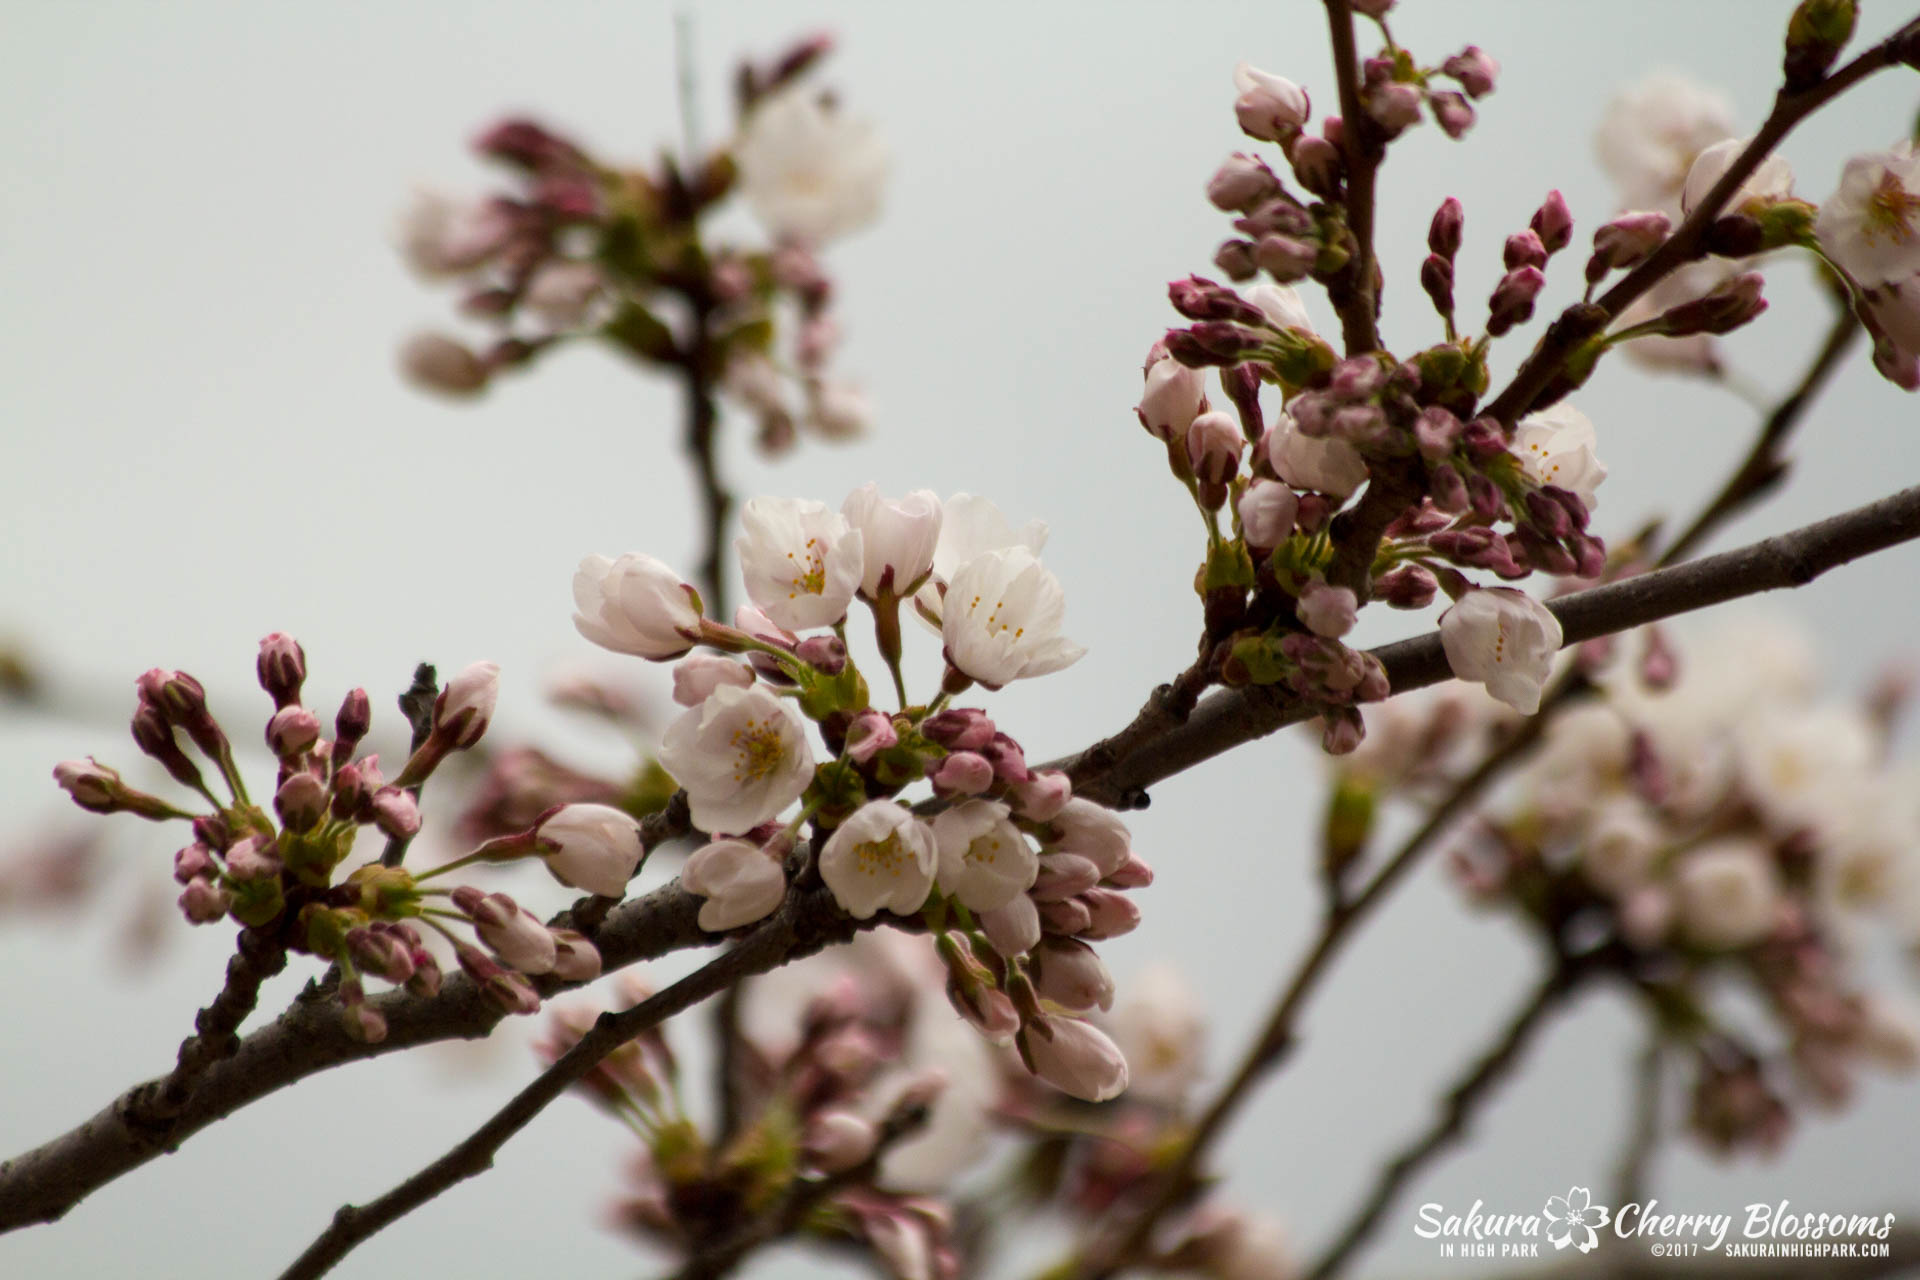 Sakura-Watch-April-21-2017-bloom-still-in-early-stages-58.jpg